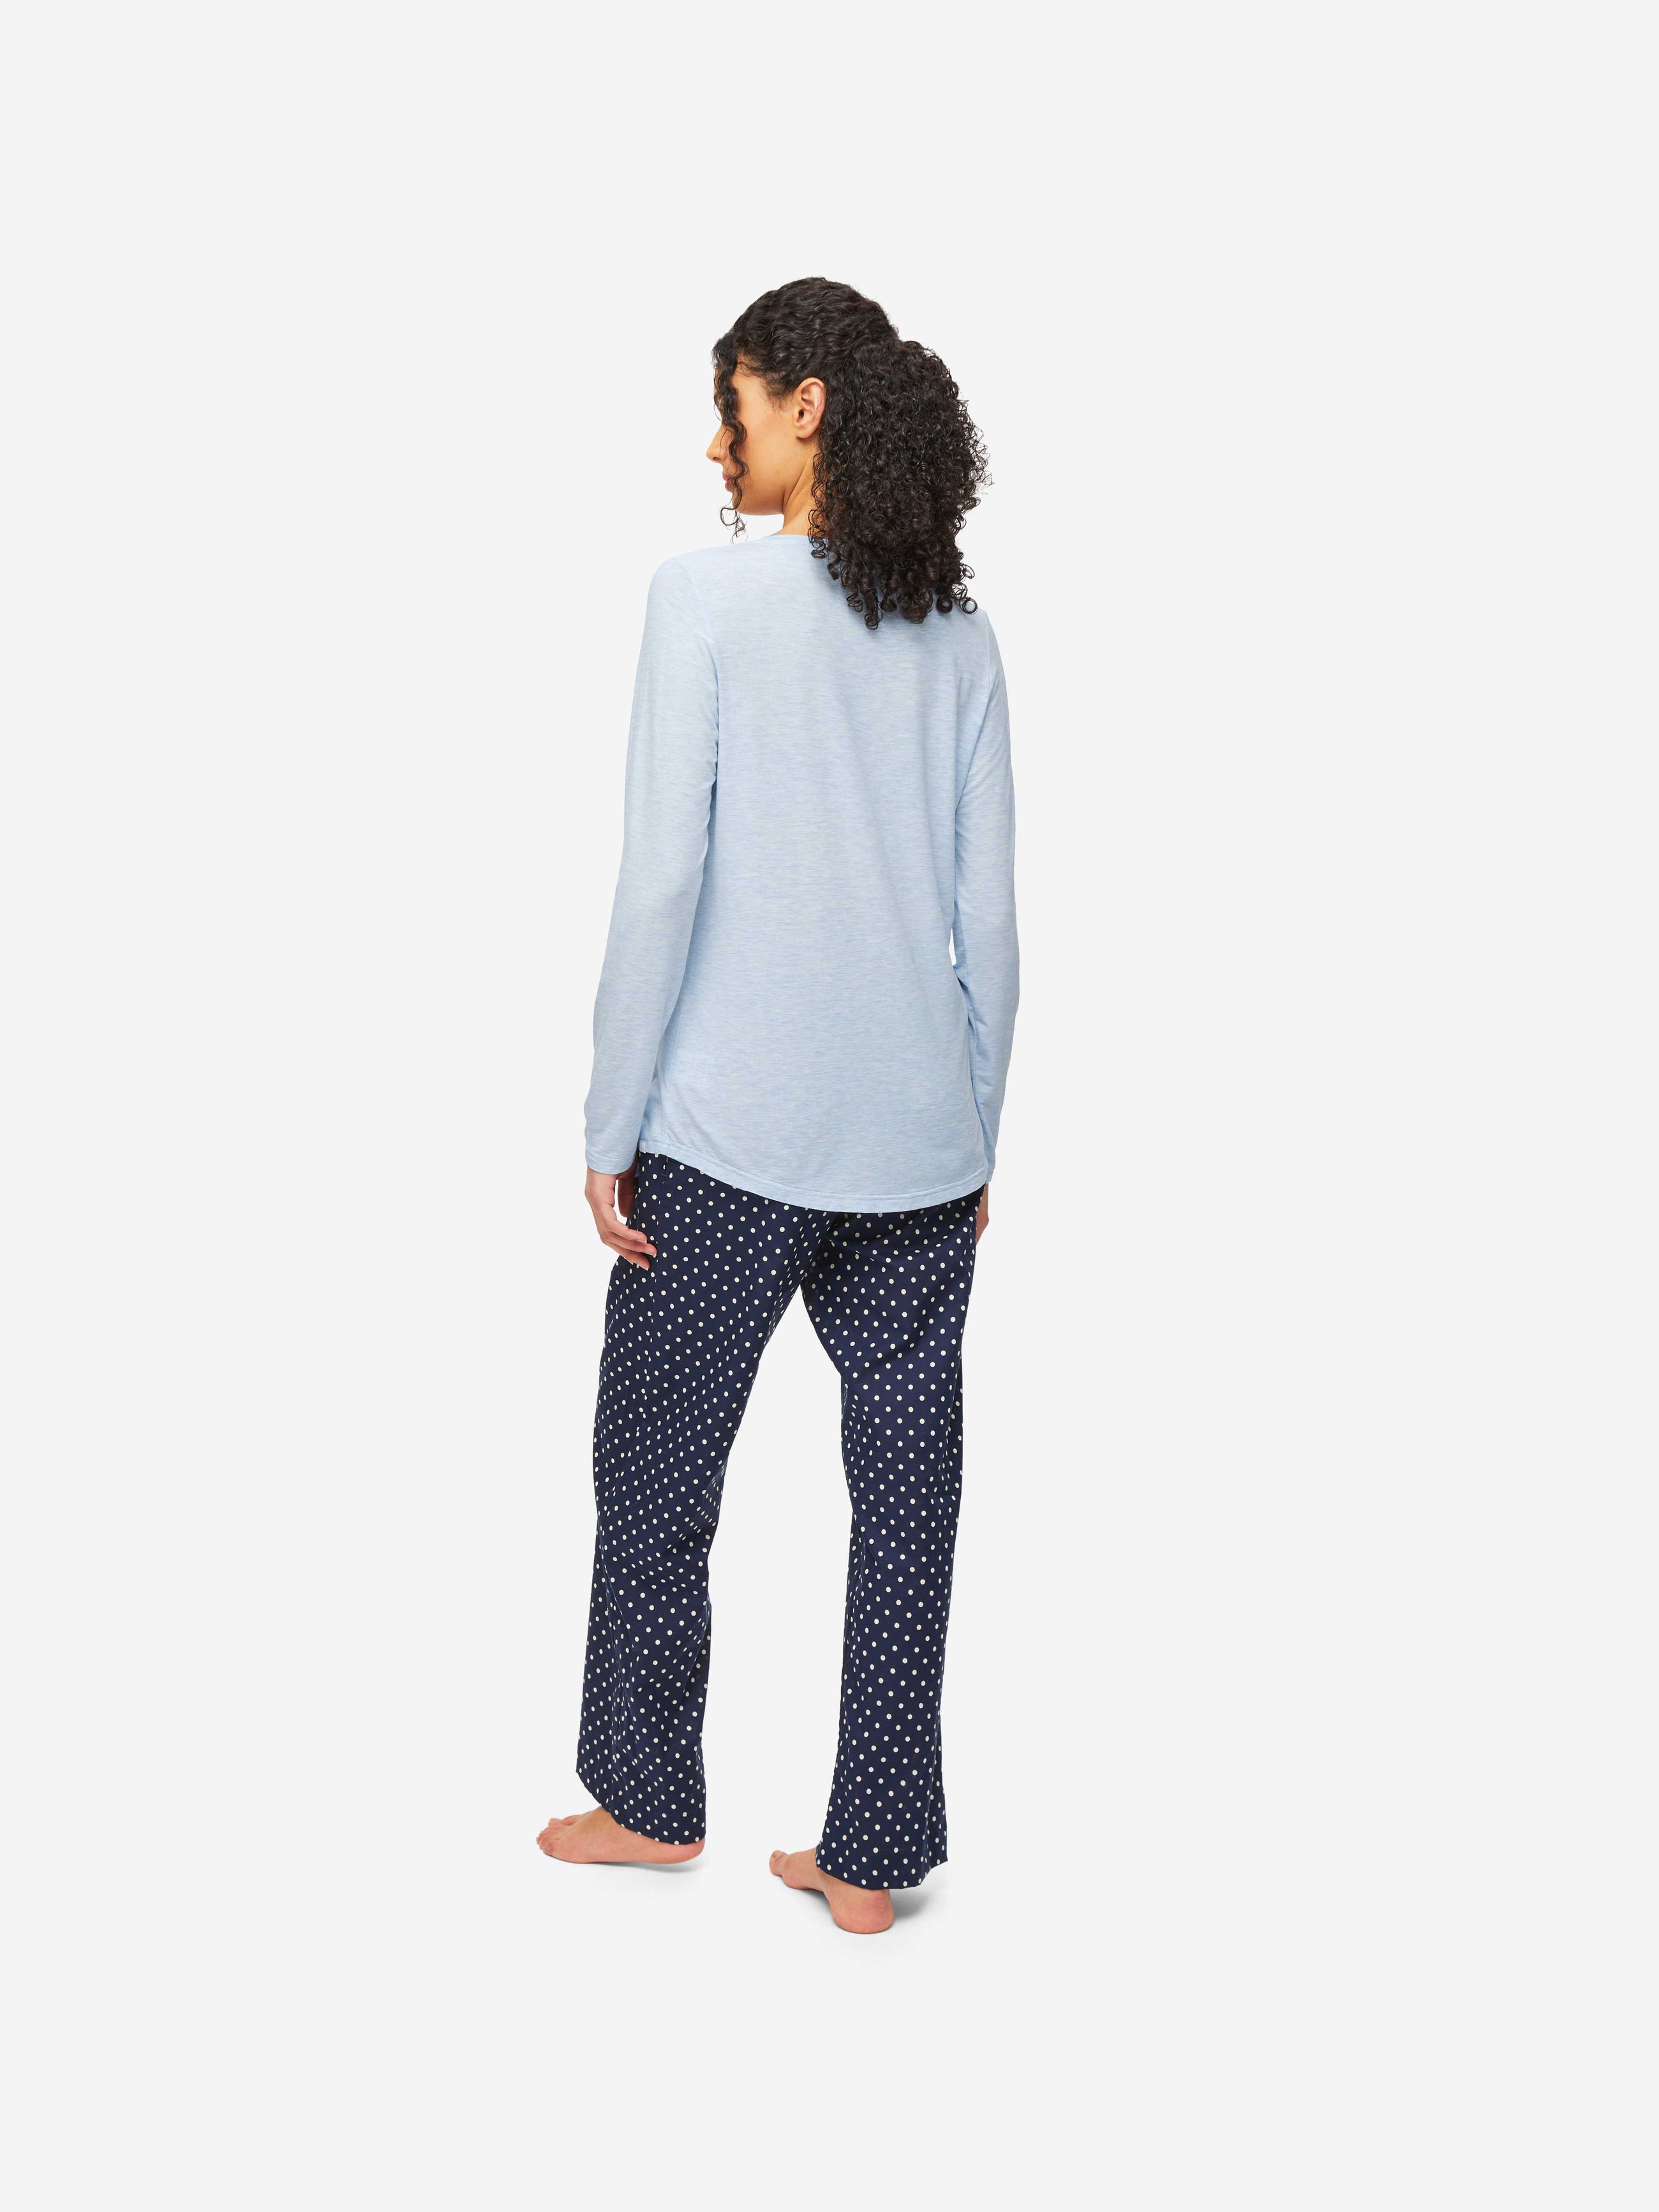 Women's Long Sleeve T-Shirt Ethan Micro Modal Stretch Light Blue Marl